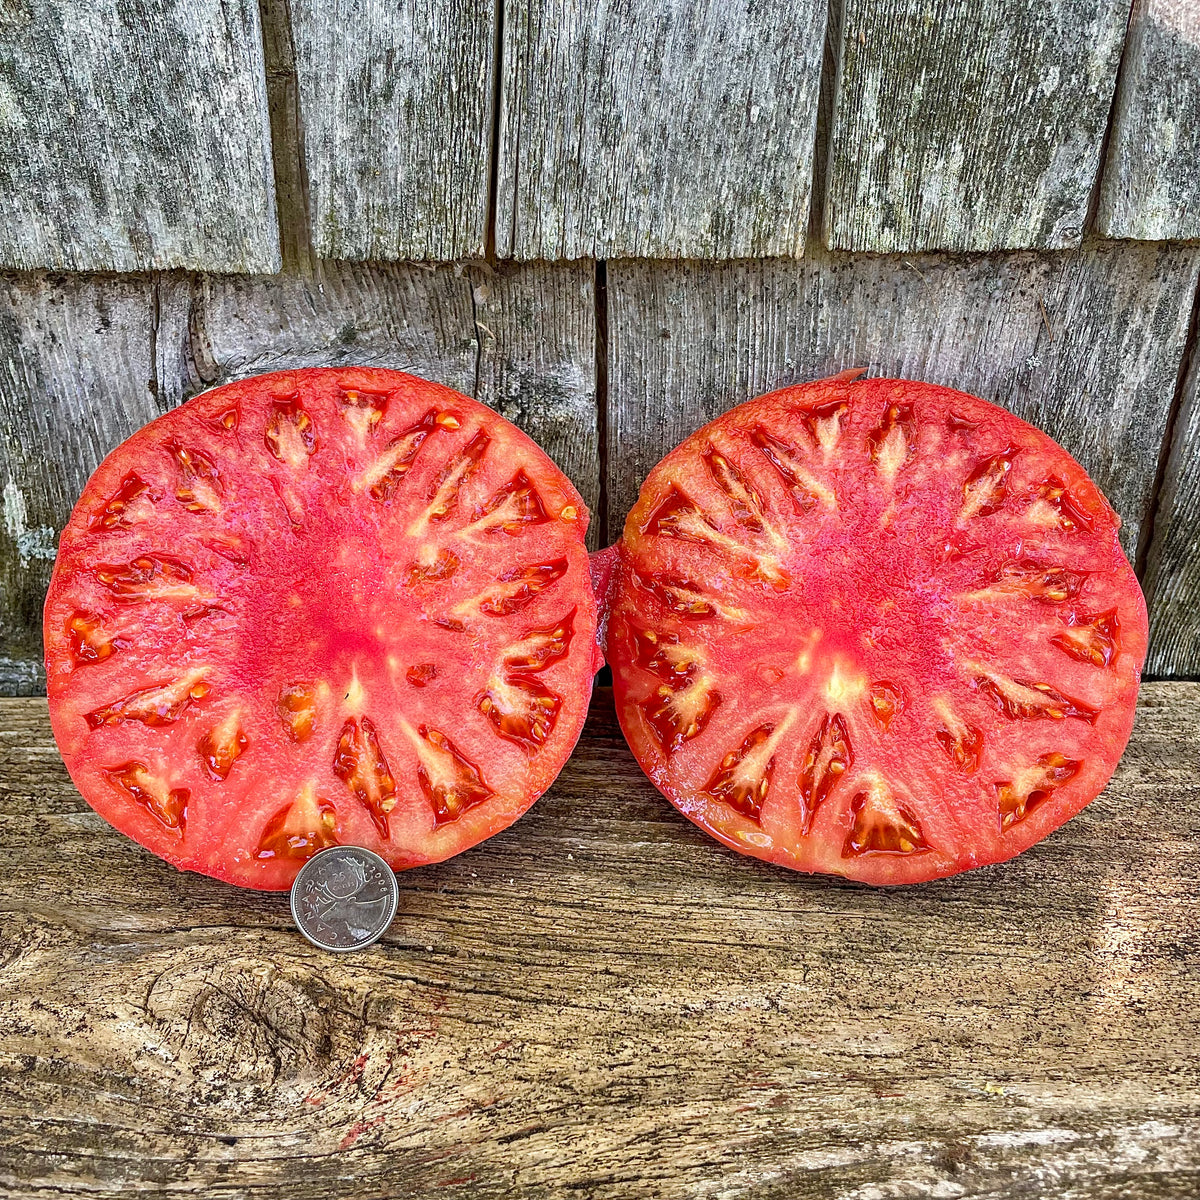 Tomato Brandywine 3.5 inch pot – Glenlea Greenhouses